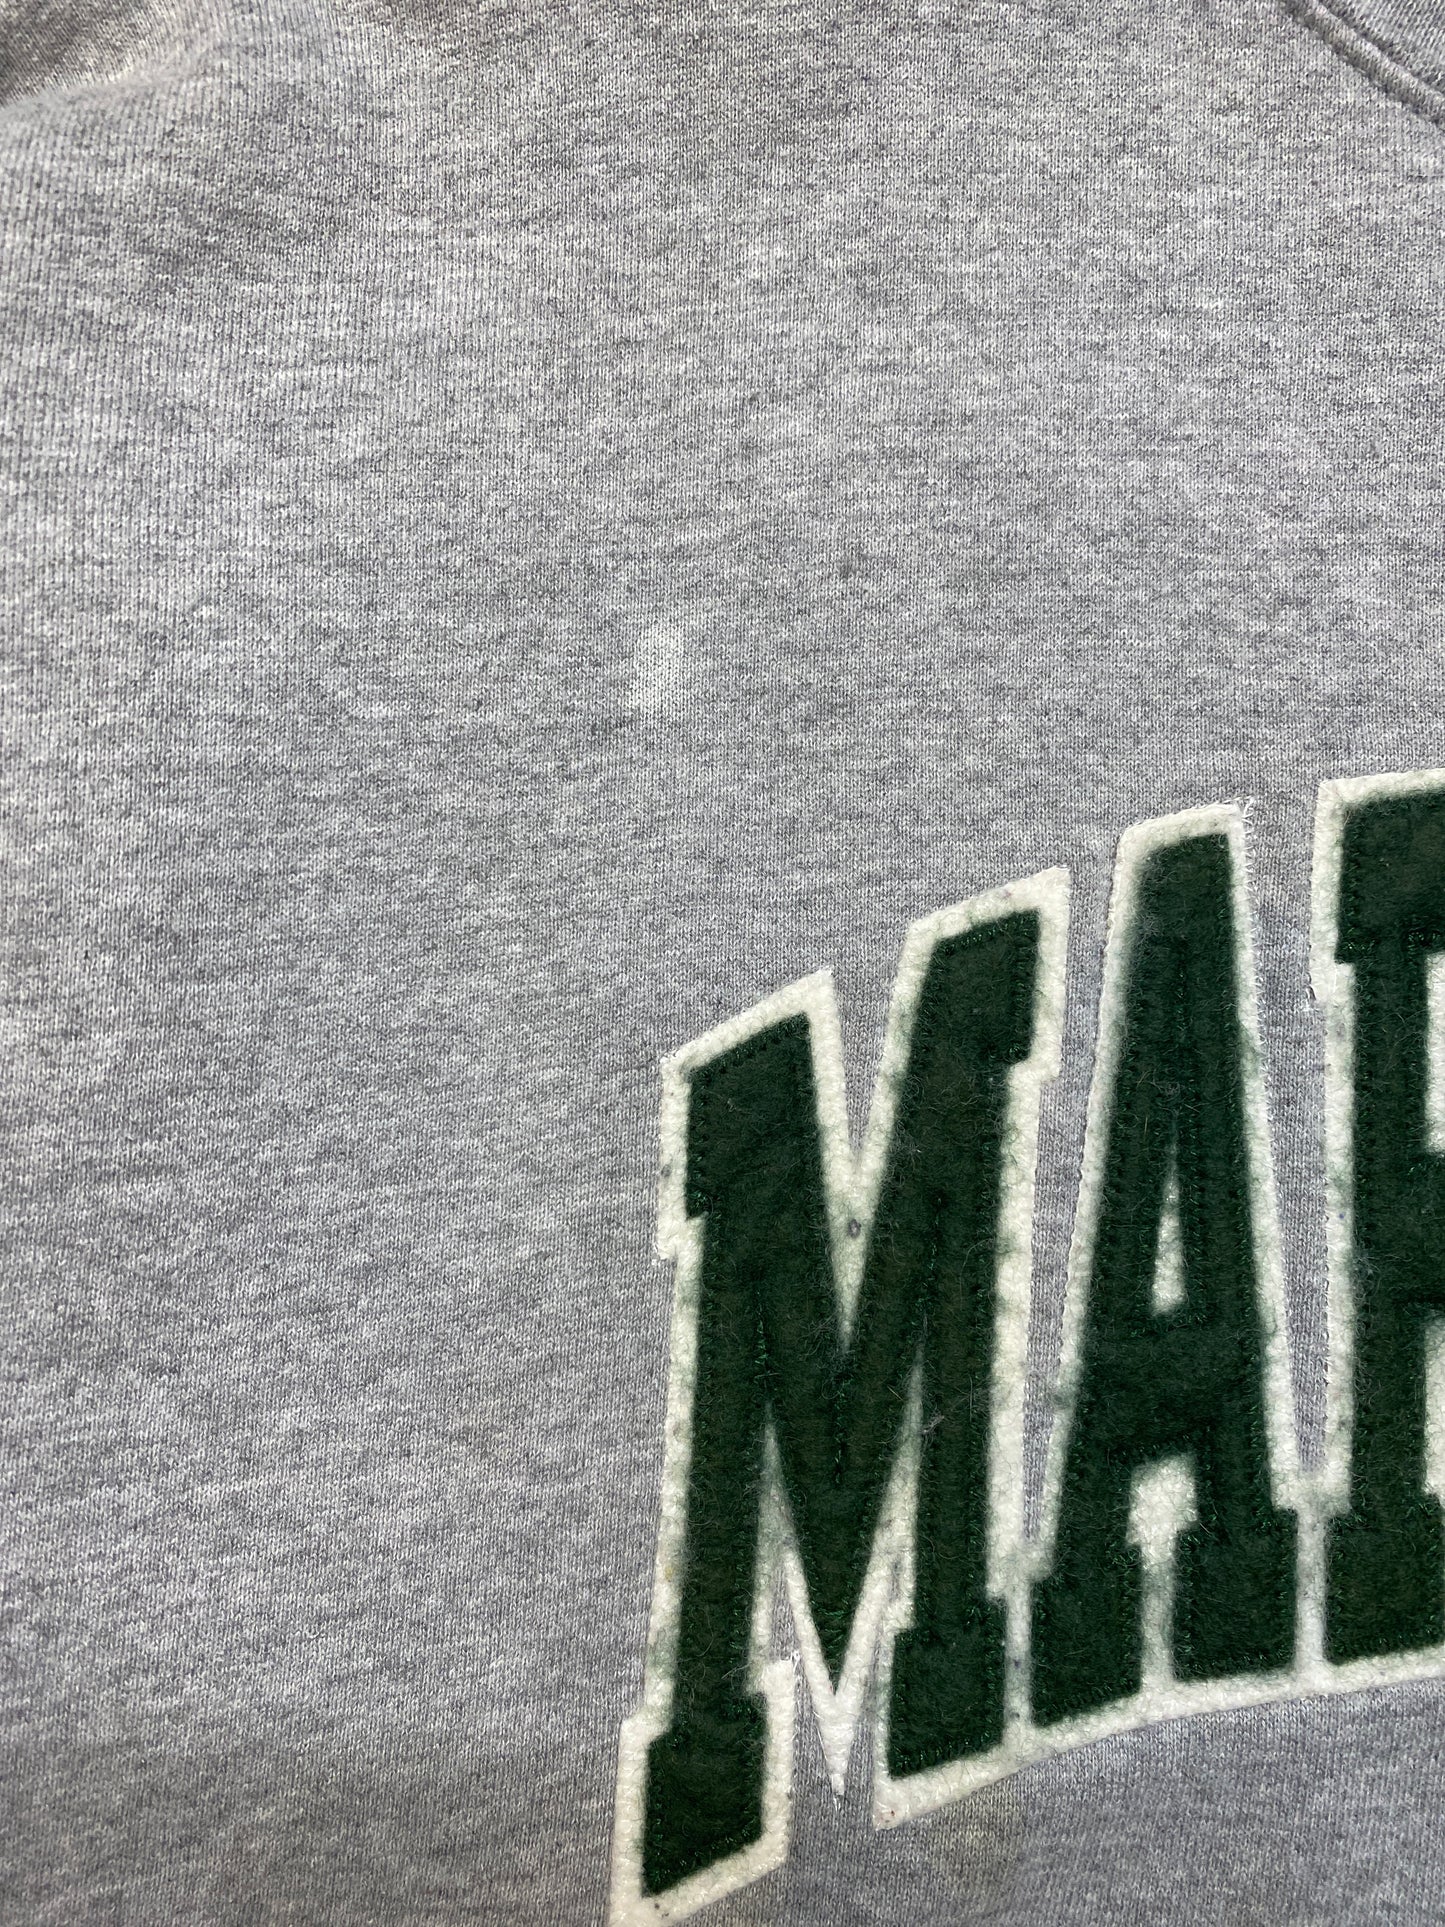 Vintage Marshall University Sweatshirt Mens XL Grey College